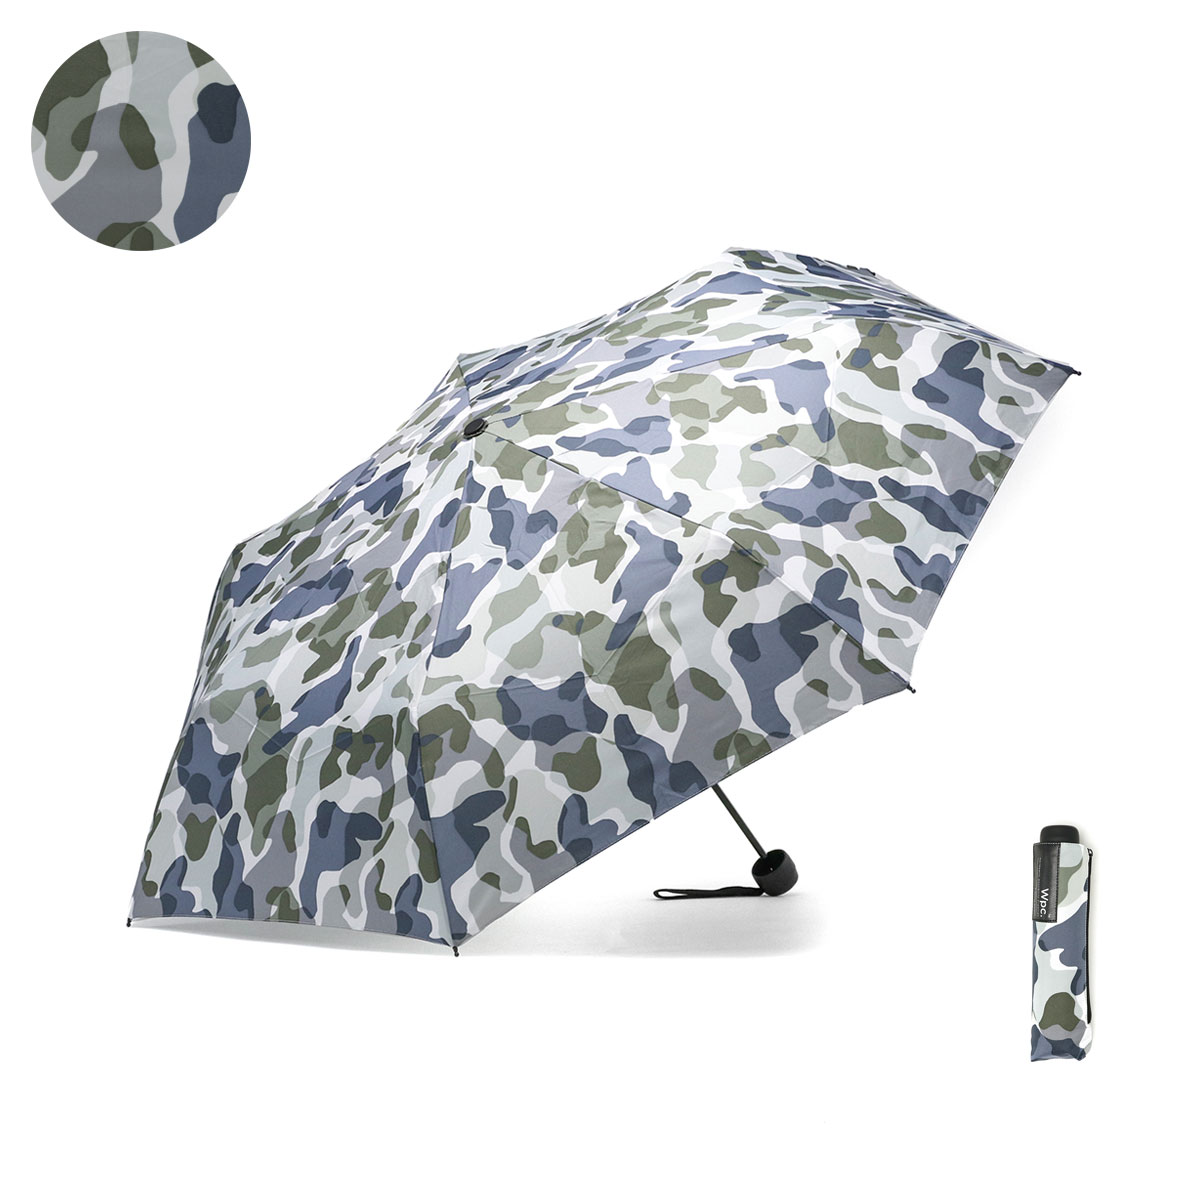 Wpc. 傘 メンズ レディース ダブリュピーシー 折りたたみ傘 雨傘 傘 軽量 手動開閉 晴雨兼用...